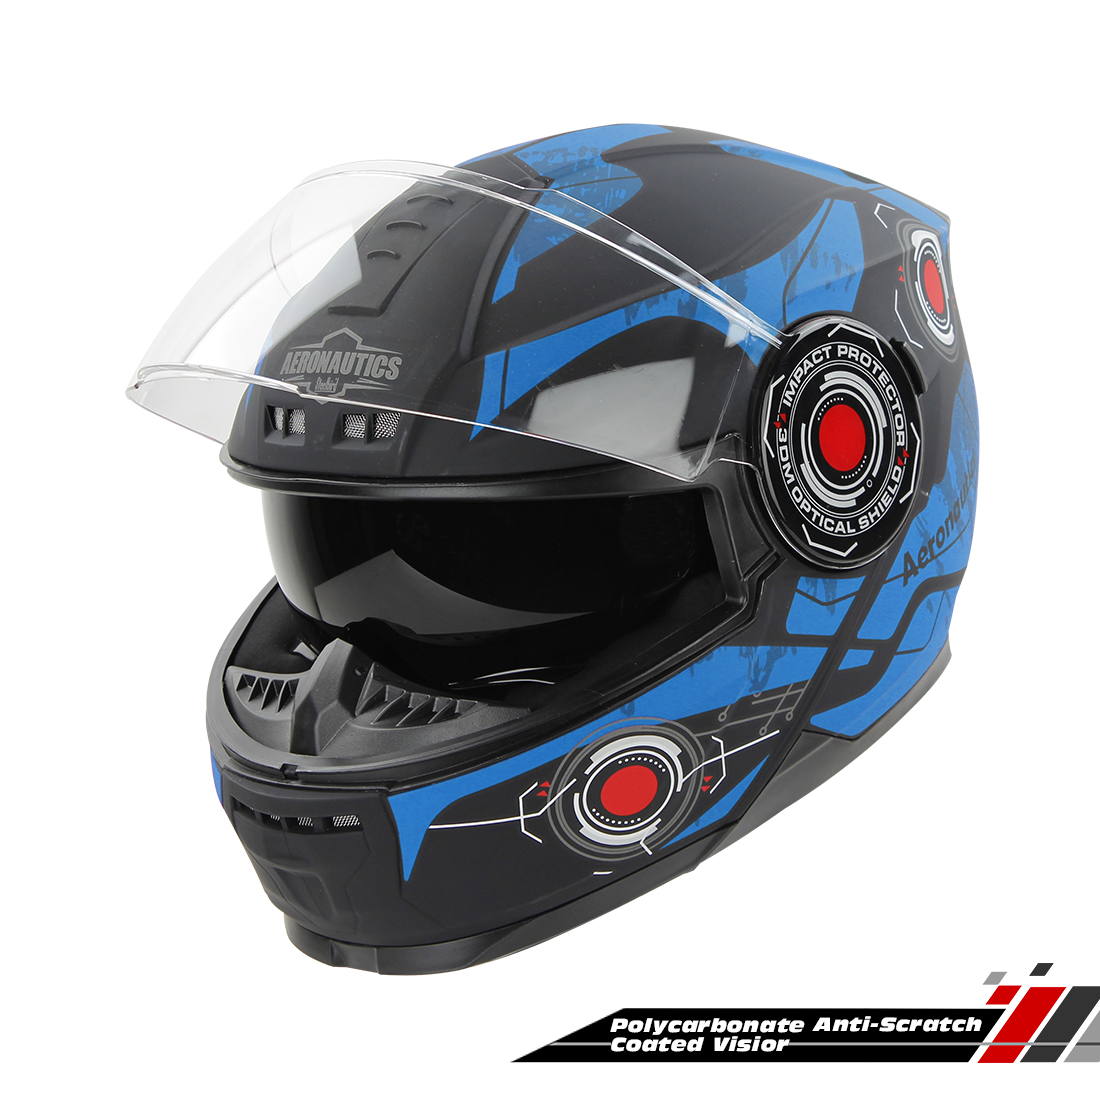 Steelbird SBH-40 Cyber ISI Certified Full Face Graphic Helmet For Men And Women With Inner Sun Shield (Matt Black Blue)